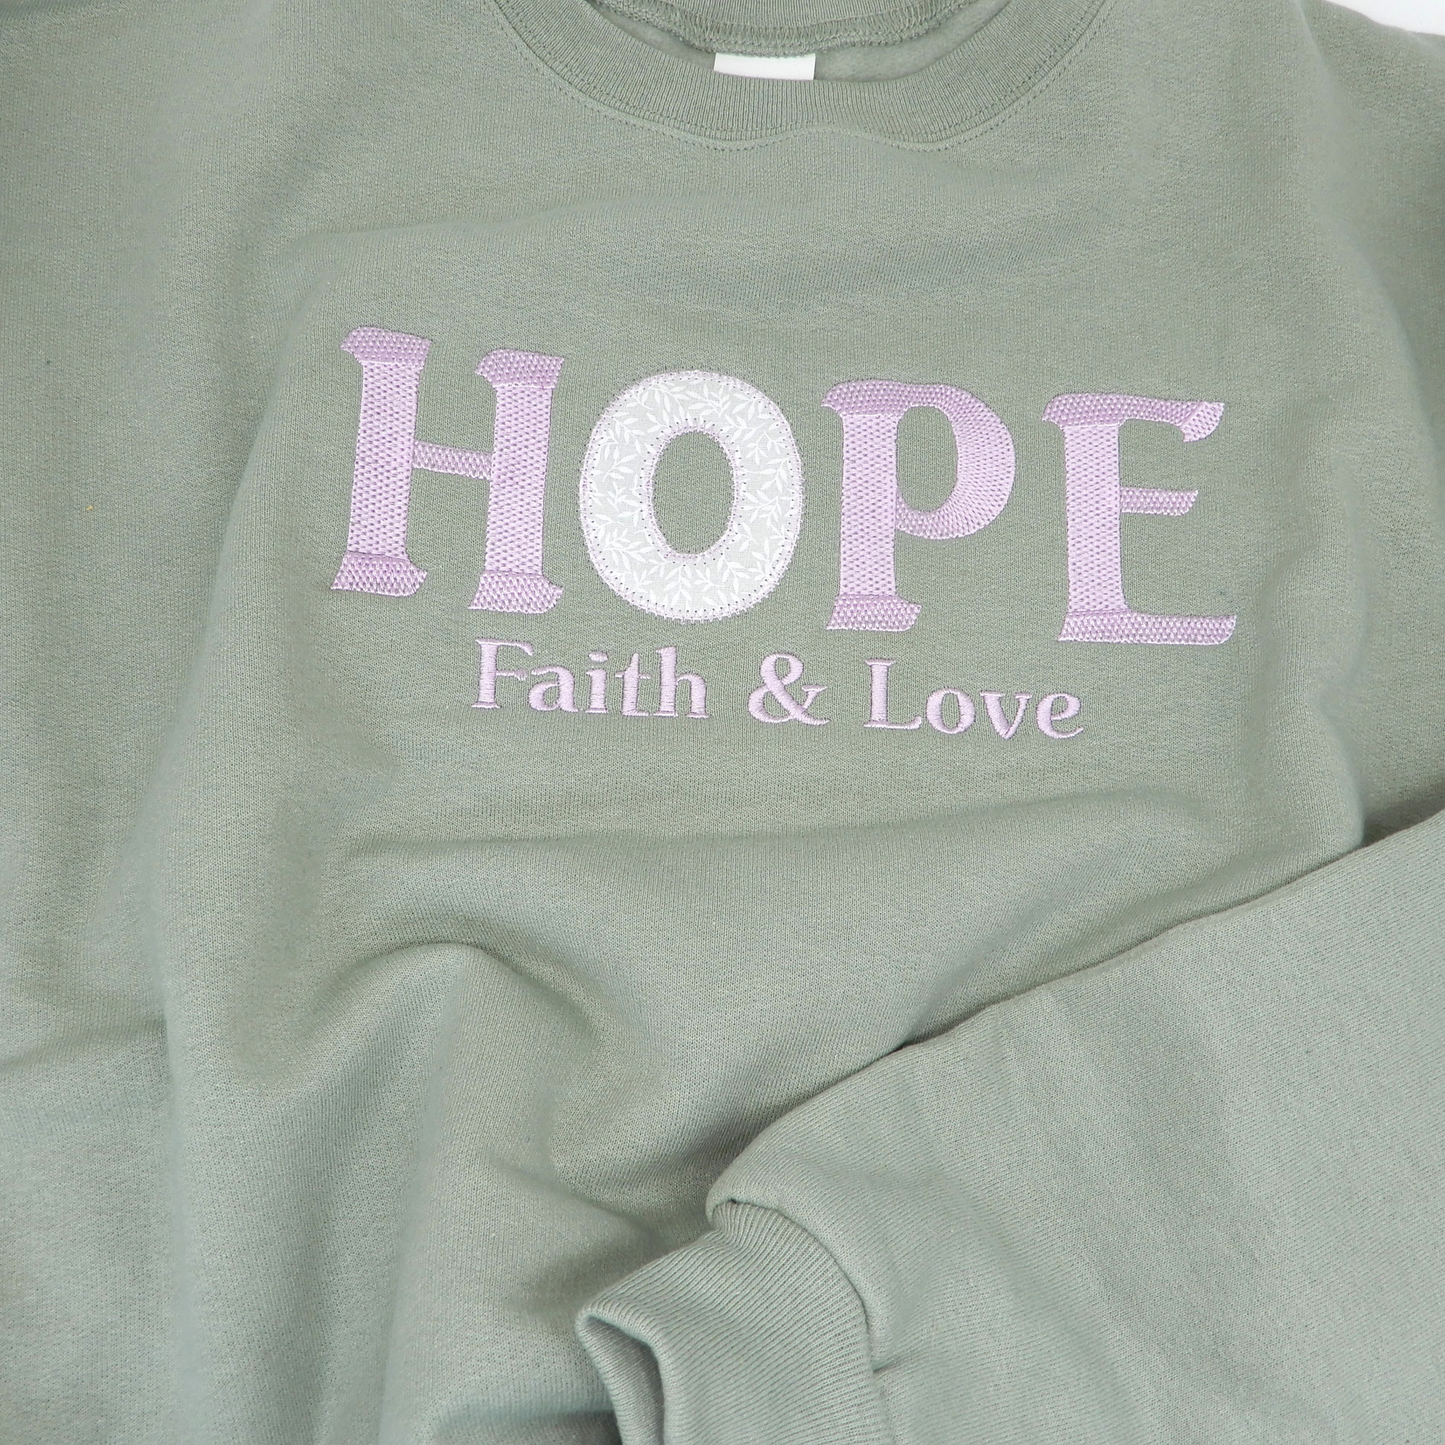 Hope, Faith & Love Sweatshirt